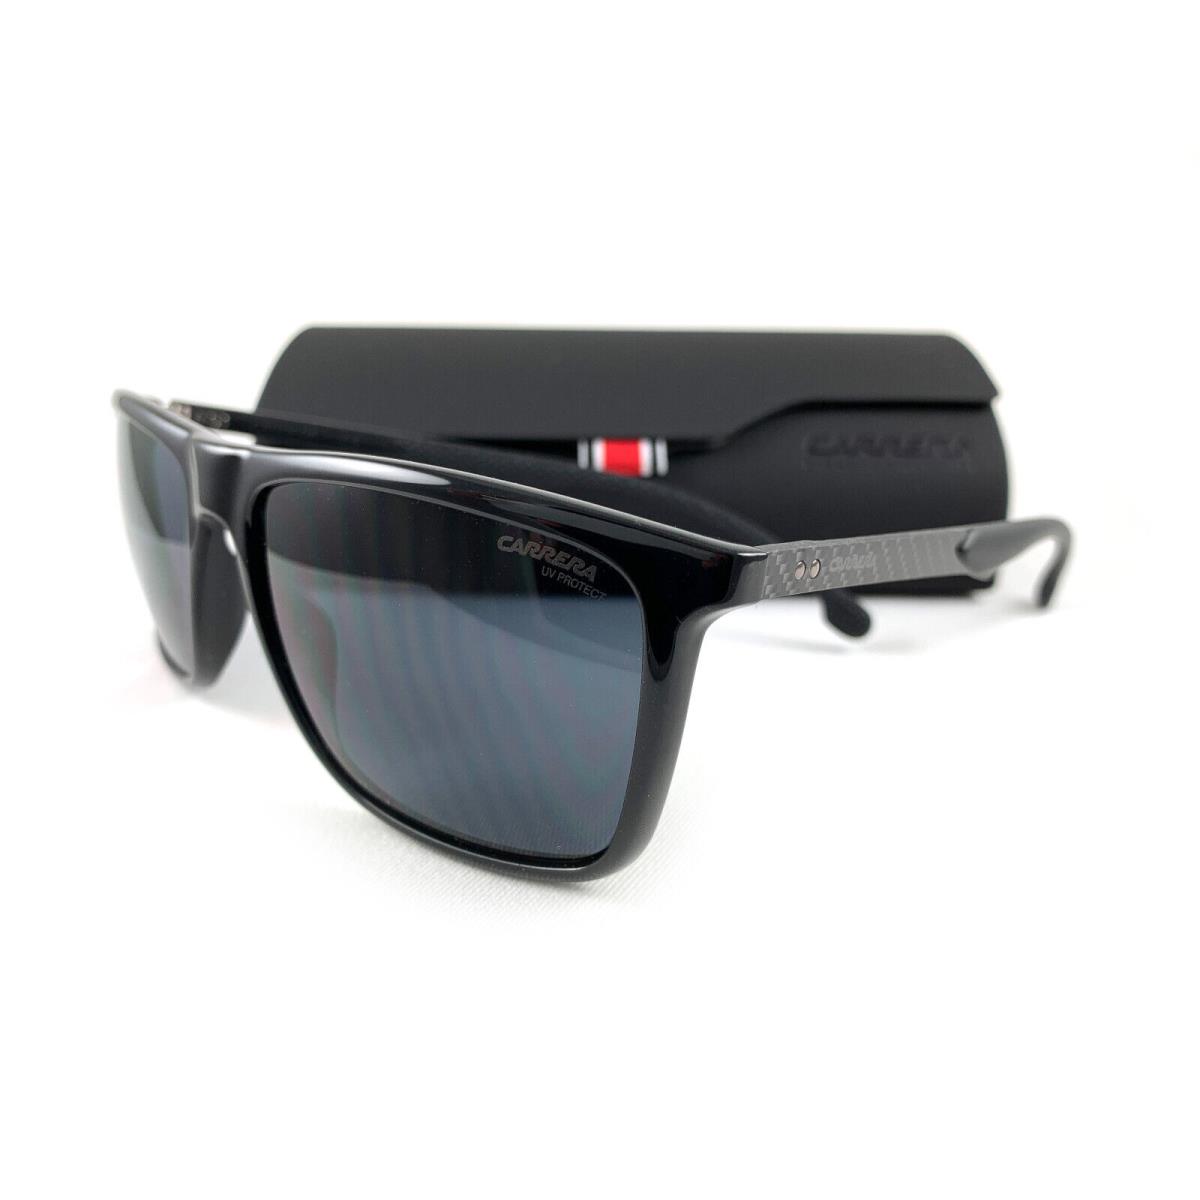 Carrera Sunglasses 8032/S Black Carbon Fiber 807IR 57mm - Carrera sunglasses  - 038768087841 | Fash Brands